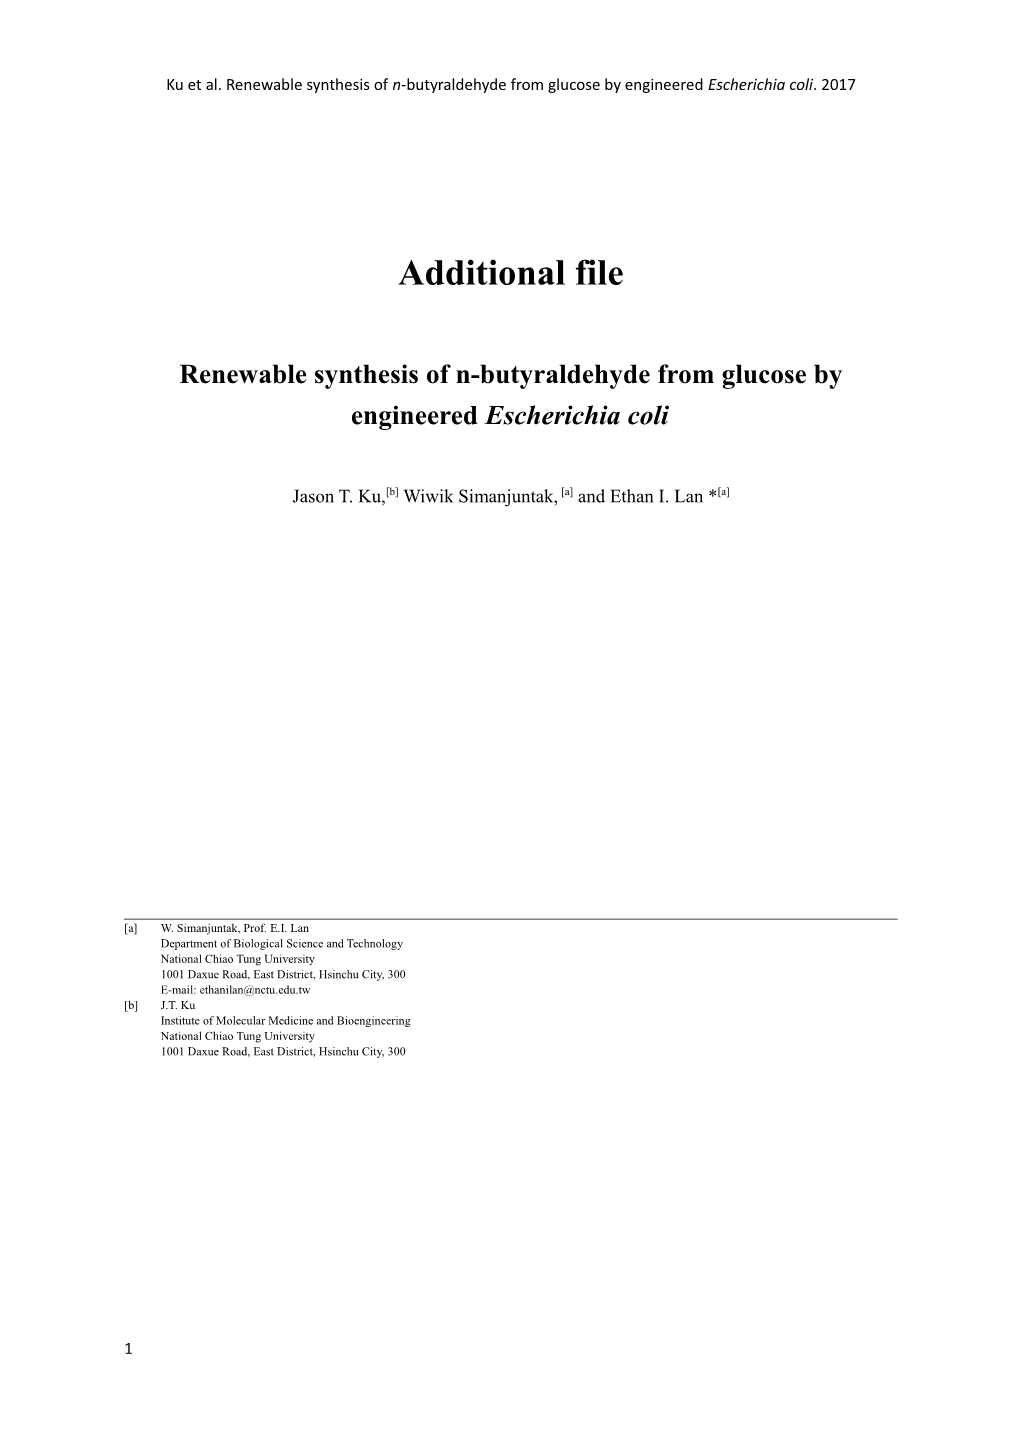 Ku Et Al. Renewable Synthesis of N-Butyraldehyde from Glucose by Engineered Escherichia